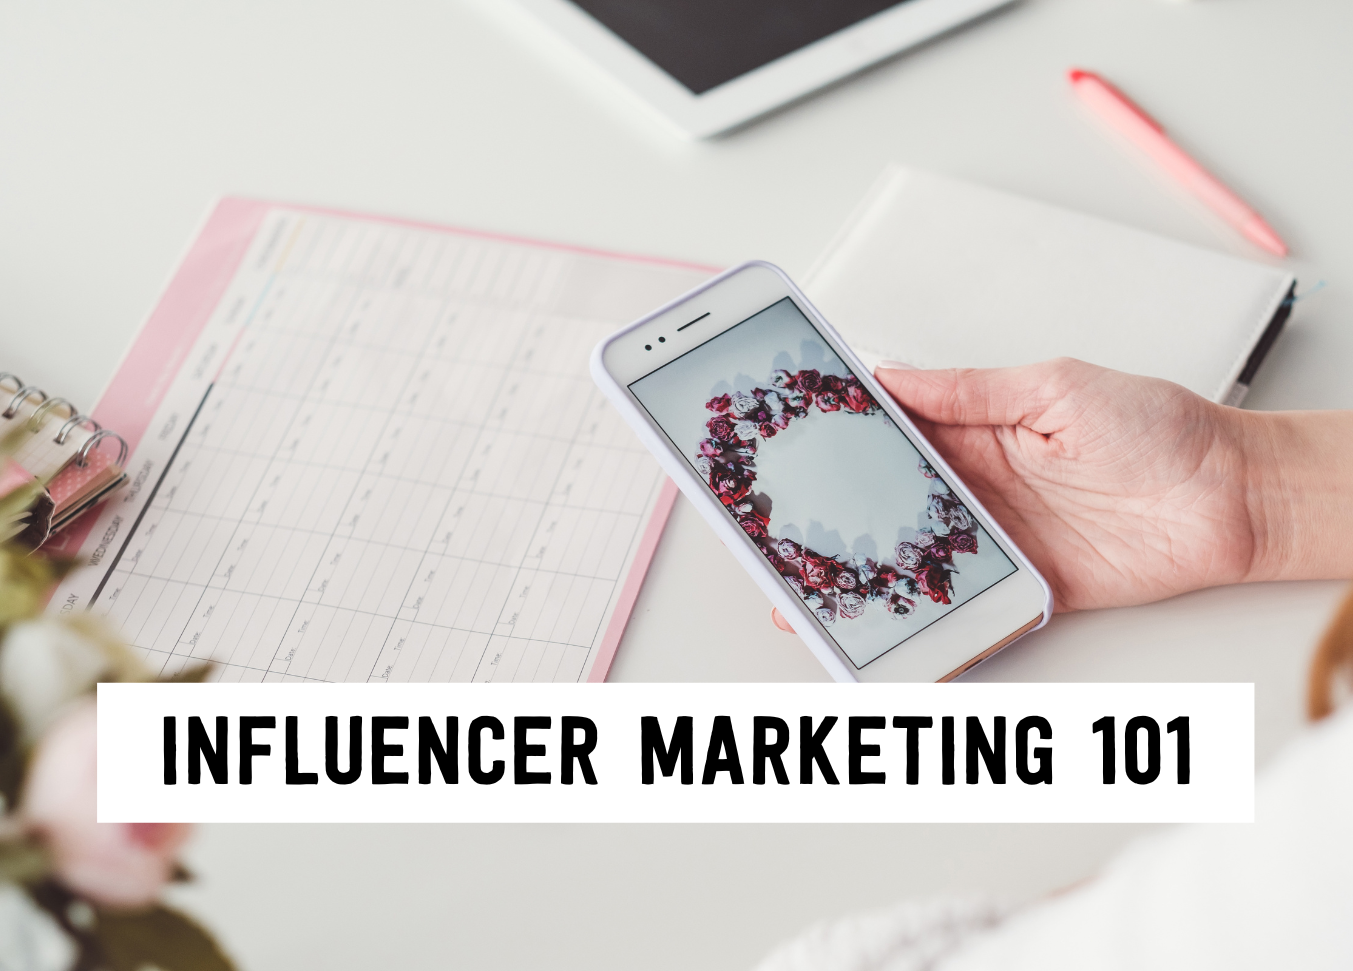 Influencer marketing 101 | Tizzit.co - start and grow a successful handmade business